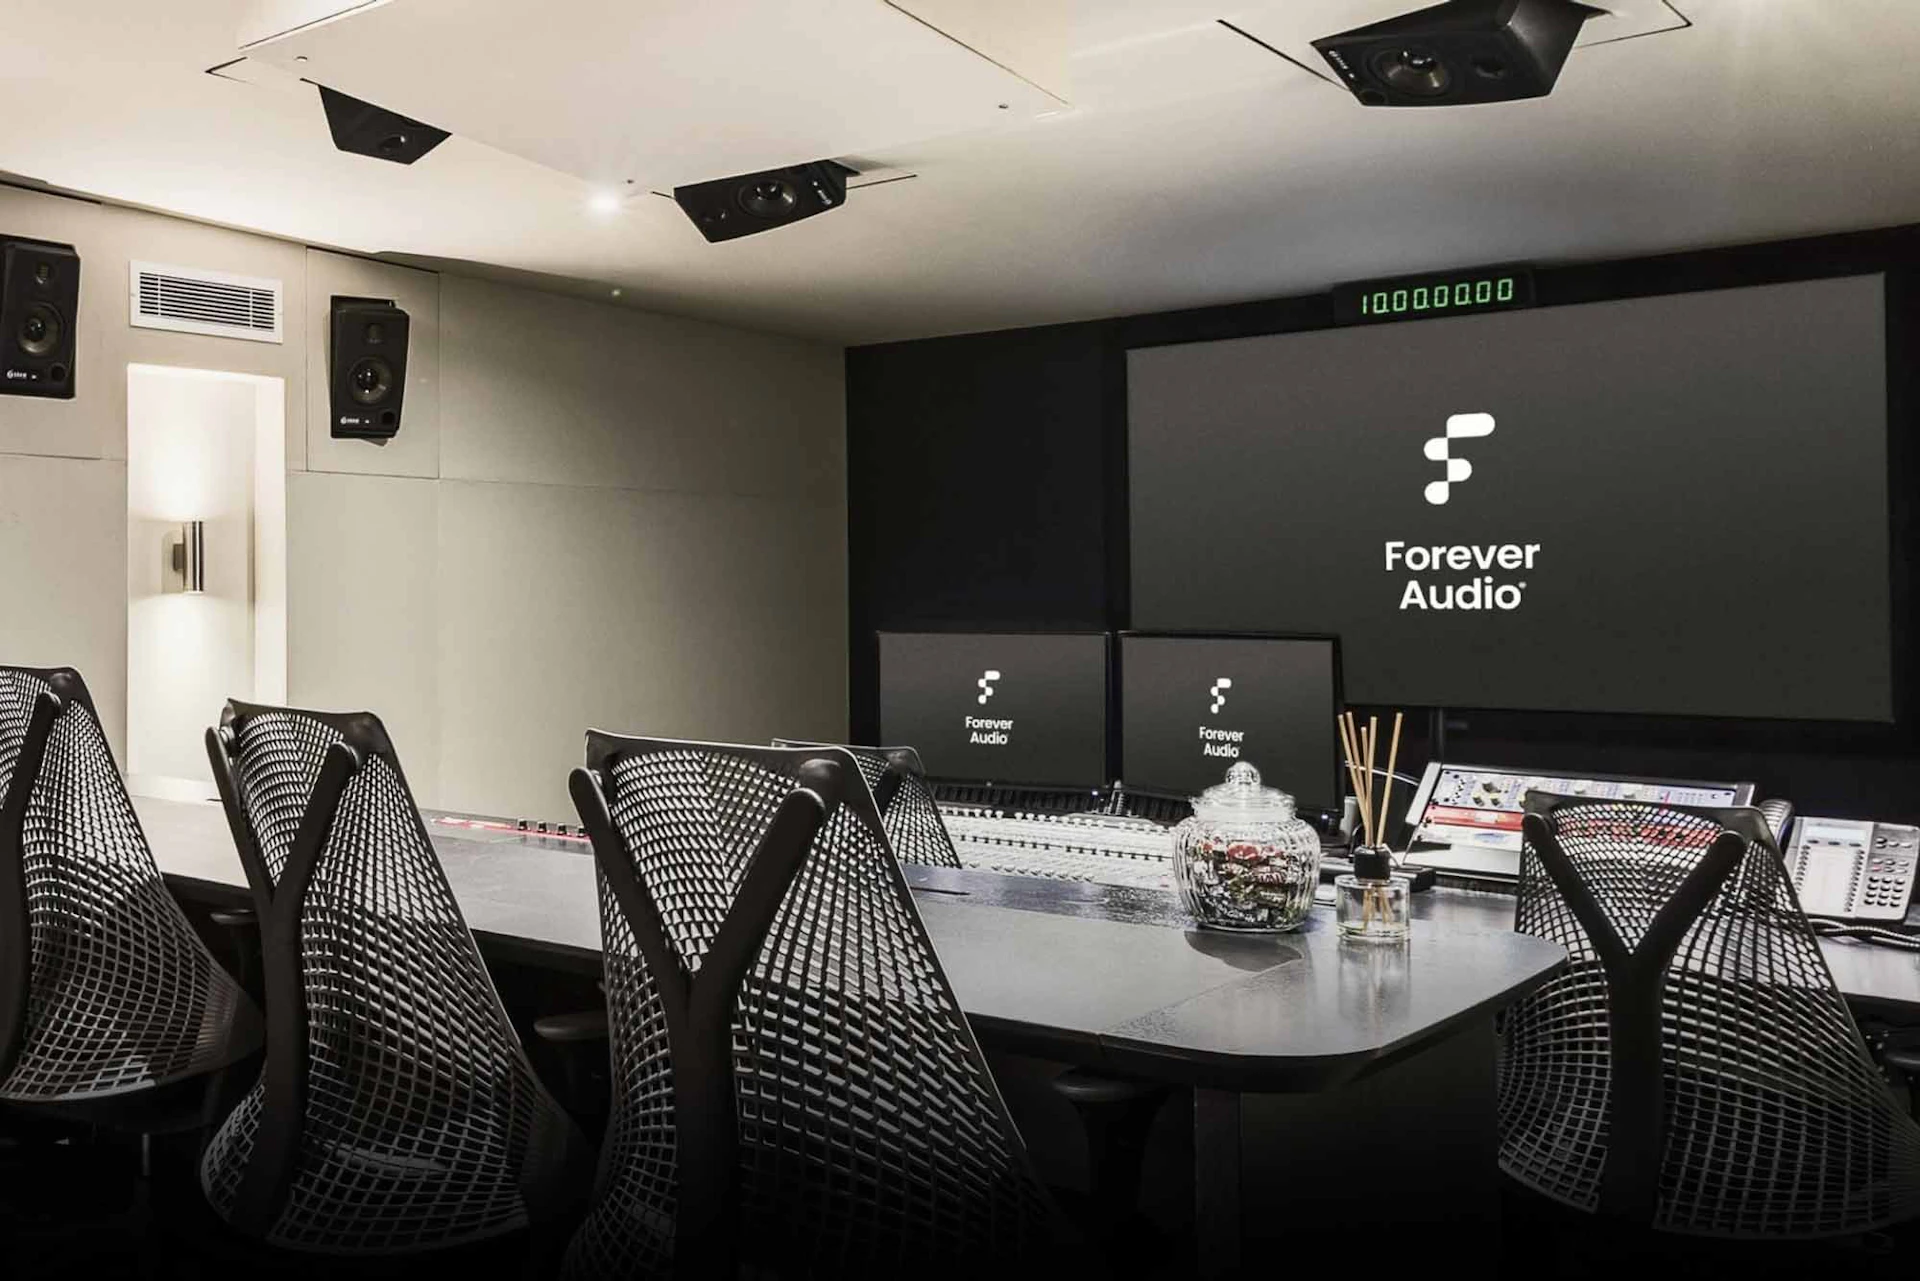 Cinema Mix Studio chairs screens Forever Audio logos